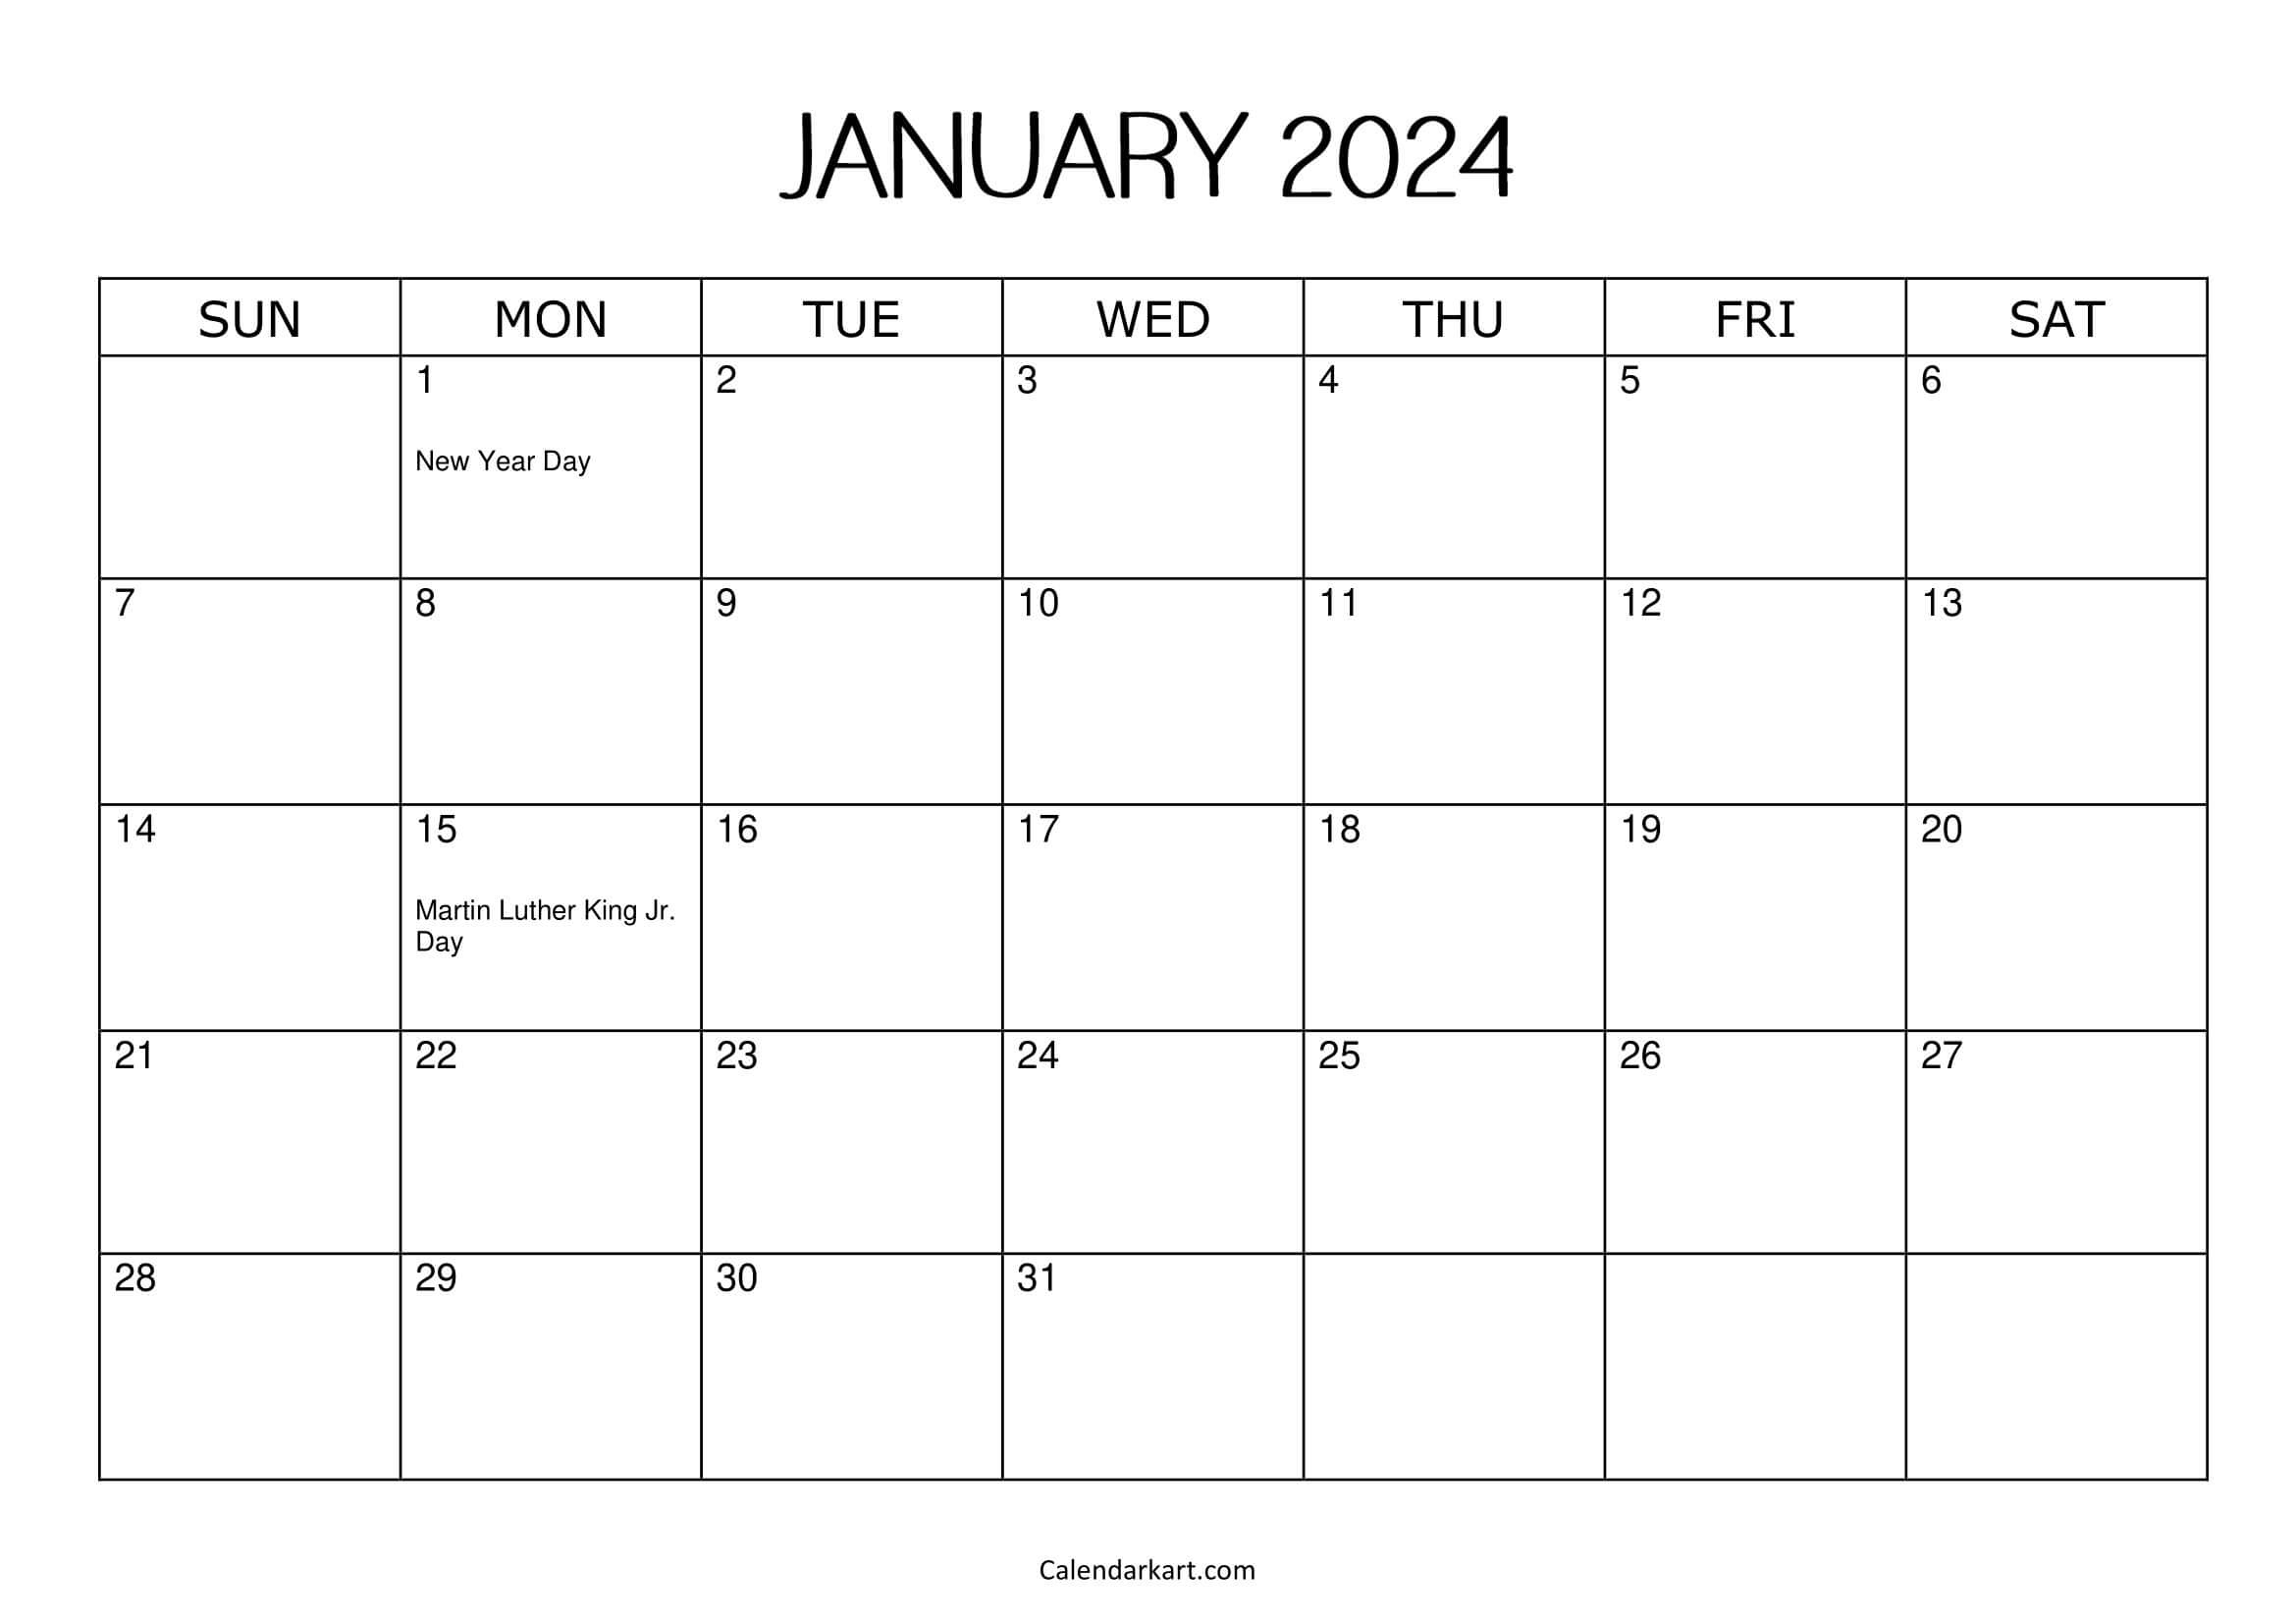 Free Printable January 2024 Calendars - Calendarkart | Free Printable Calendar 2024 Monthly With Holidays